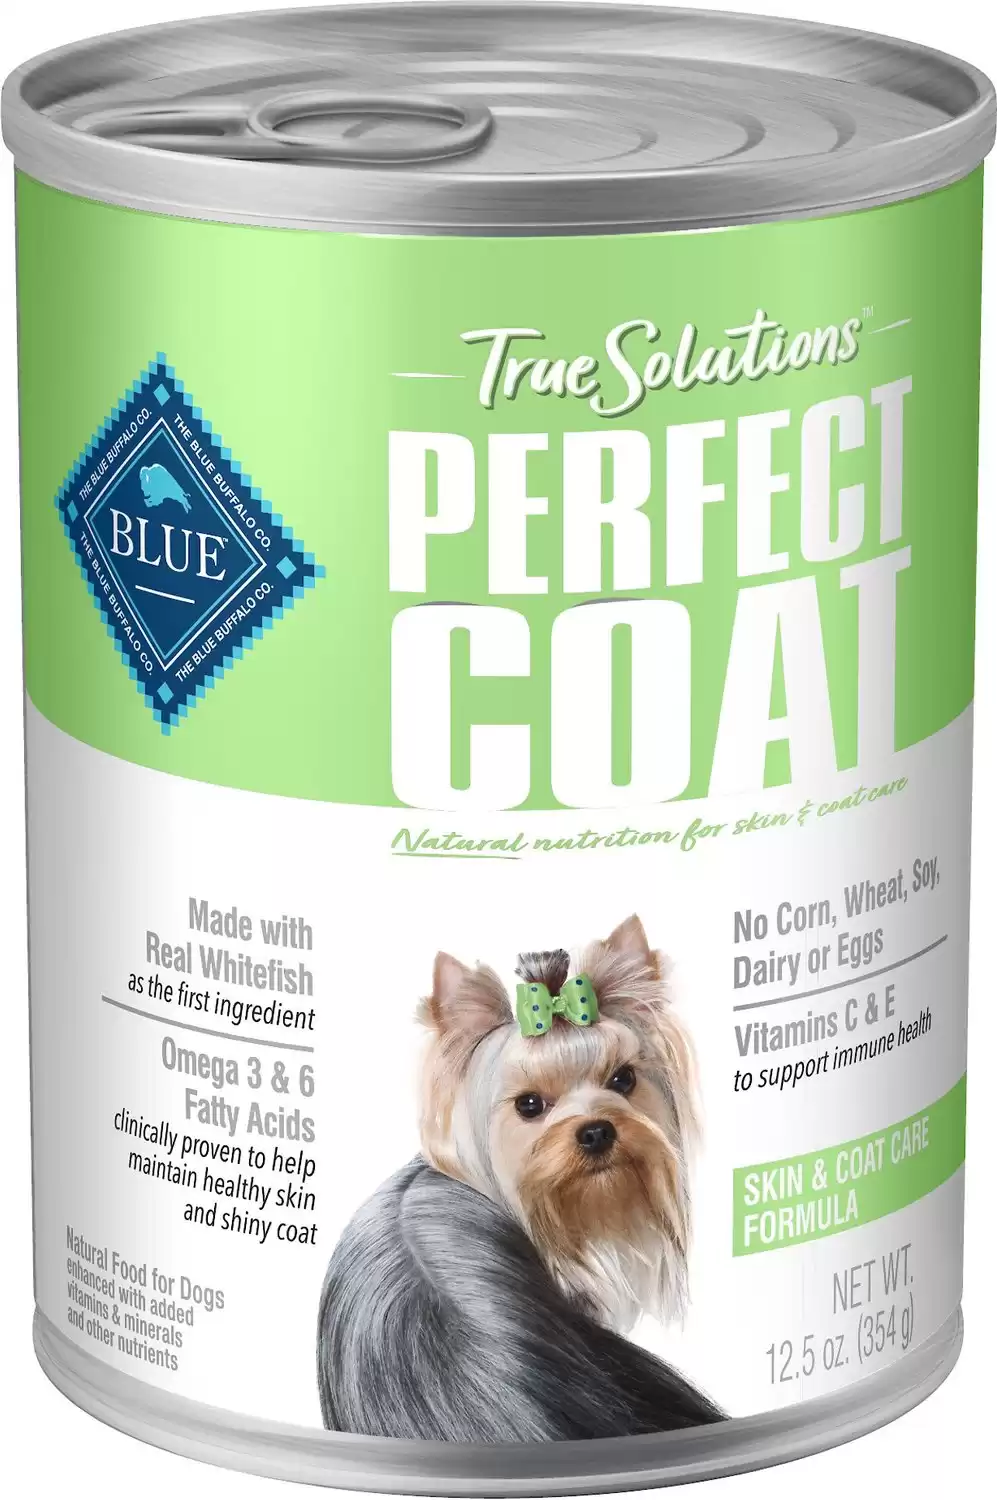 Blue Buffalo True Solutions Perfect Coat Skin & Coat Care Wet Dog Food